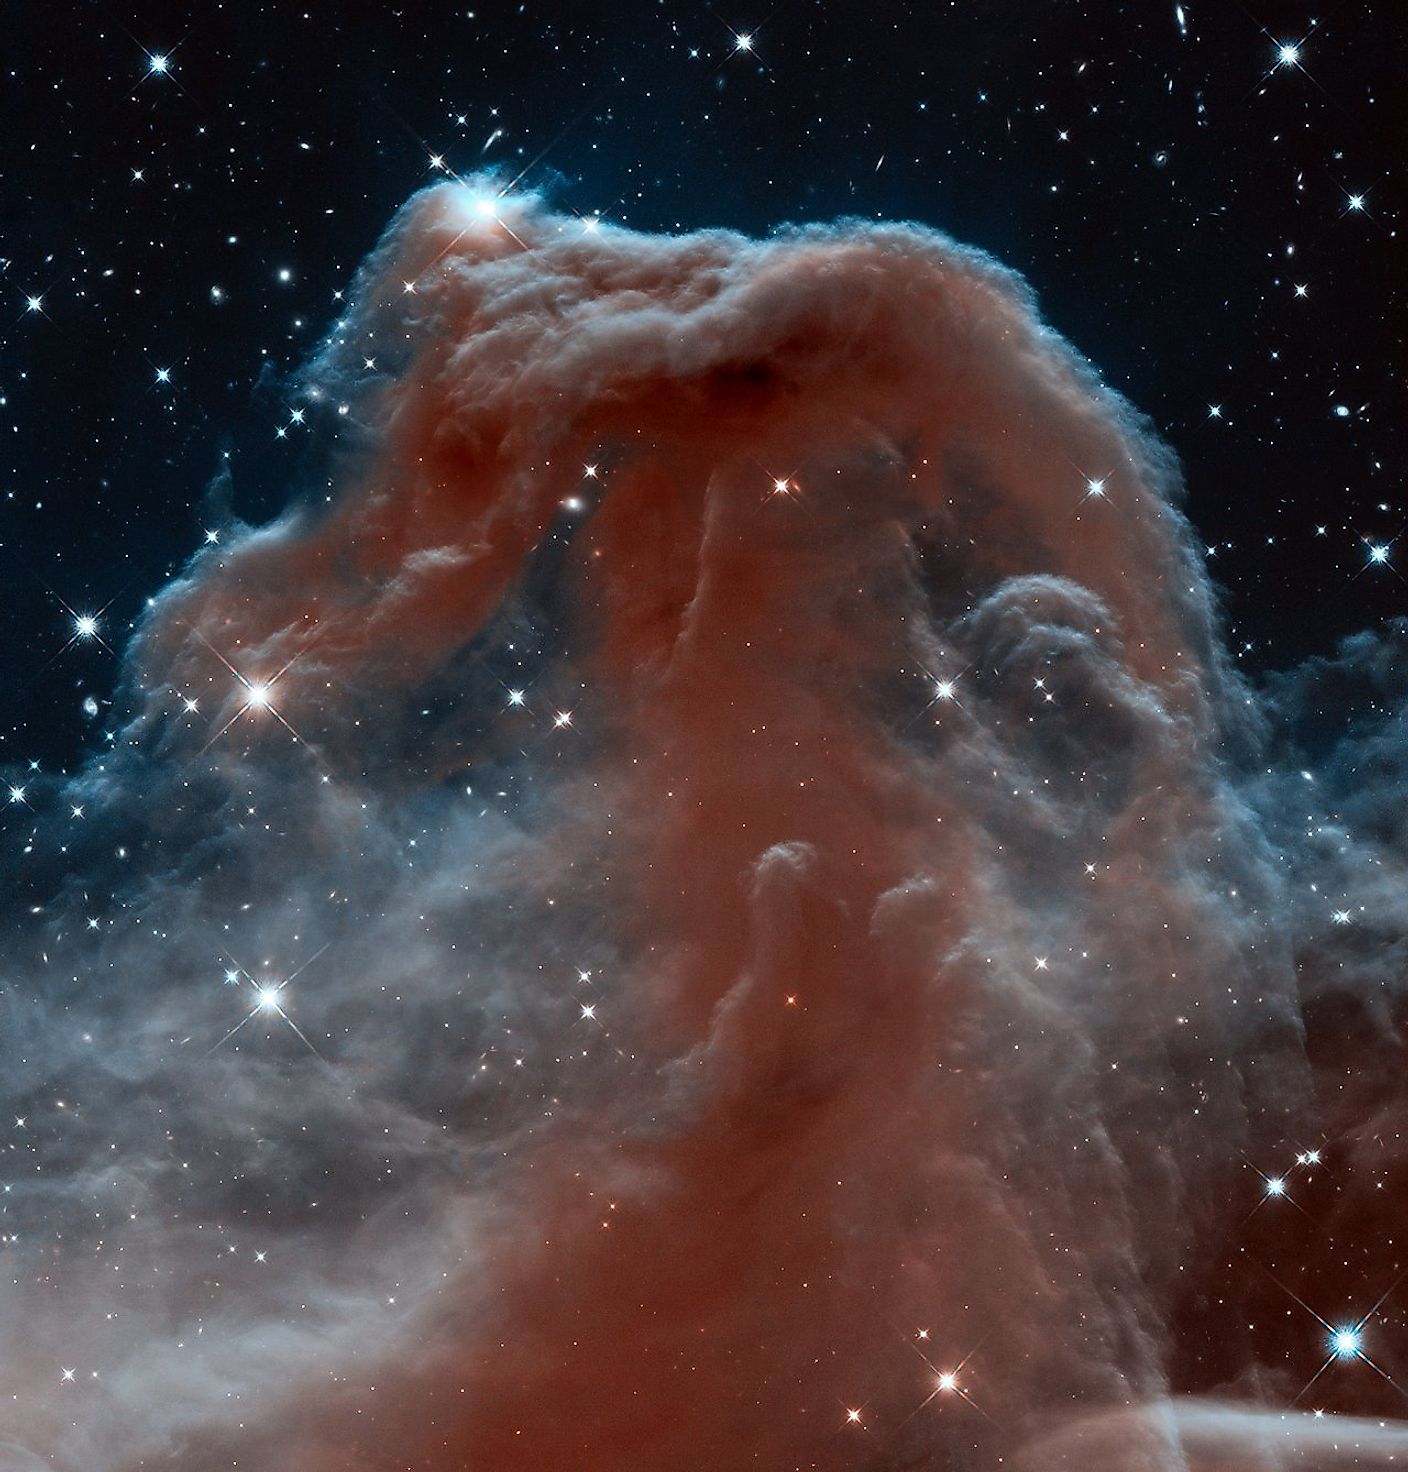 Hubble image of the Horsehead Nebula. Image credit: NASA/ESA